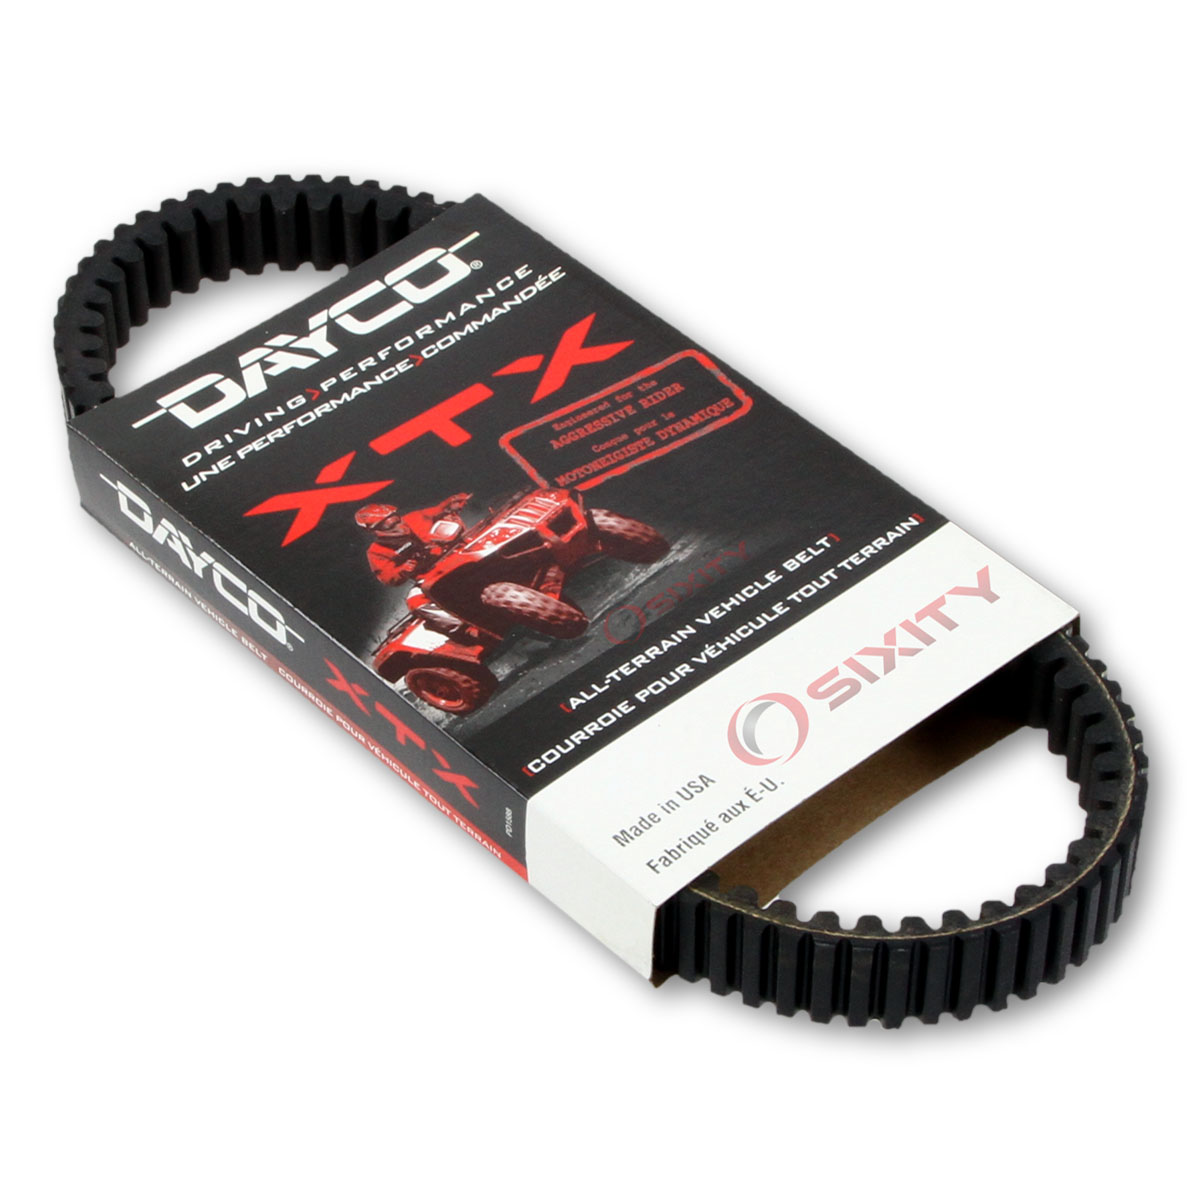 Dayco XTX Drive Belt for 2009-2011 Arctic Cat 550 4x4 Auto TRV - Extreme